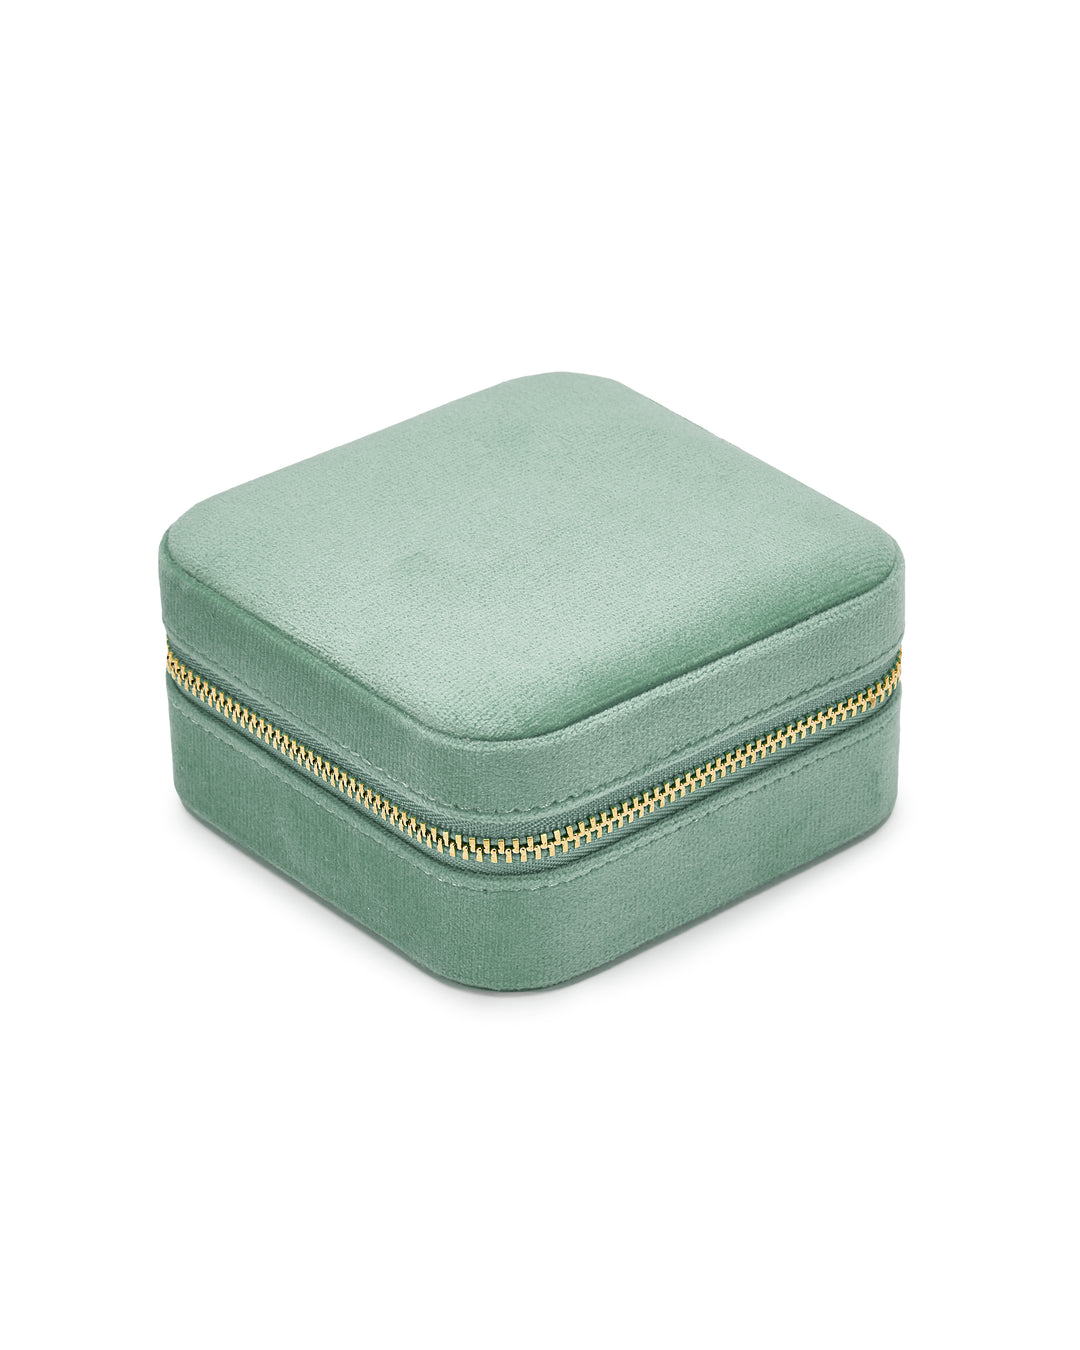 Luxurious French Green Velvet  Travel Jewellery Box